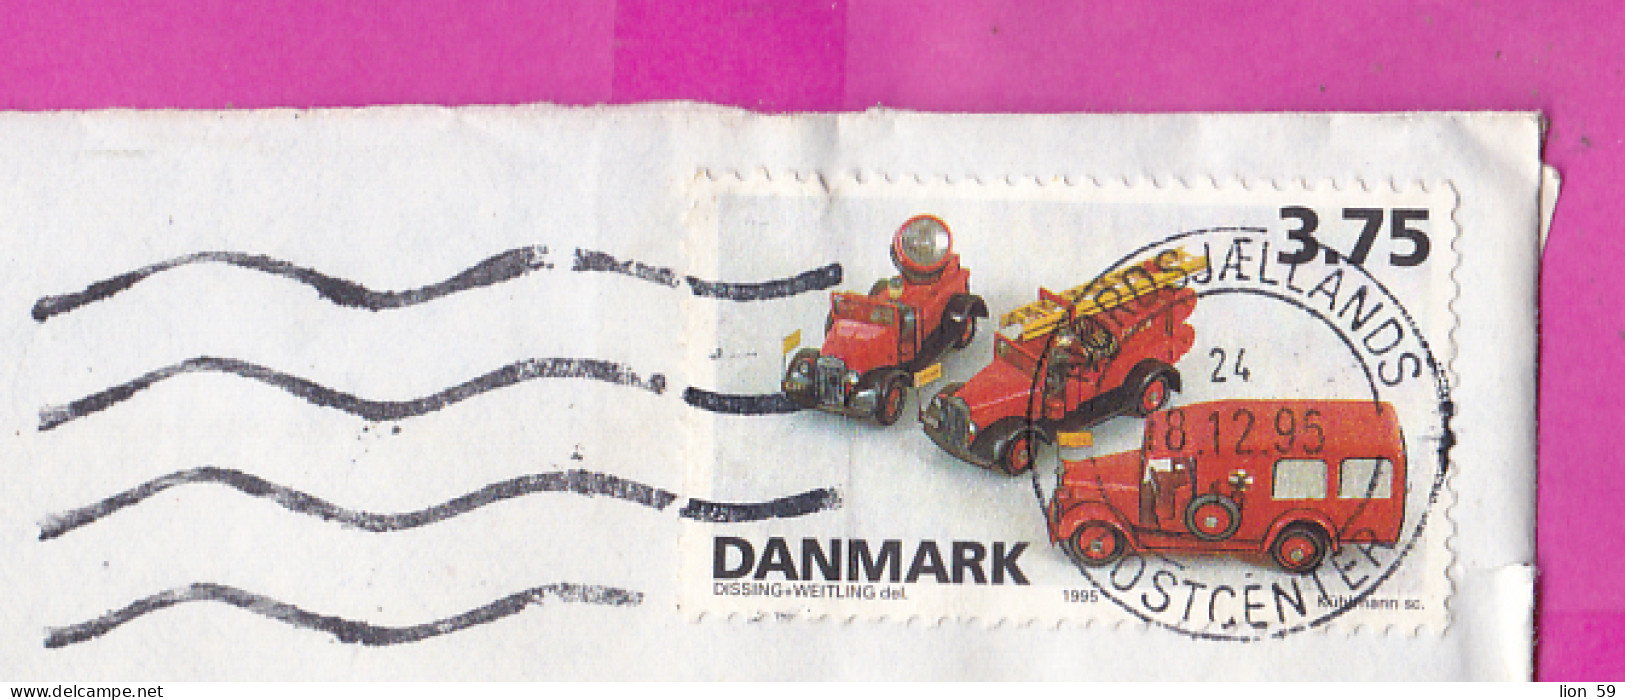 274944 / Denmark Danmark Cover Nordsjællands Ostcentep 1995 - 3.75Kr Fire Trucks, Fire Engine, Truck With Headlight, Toy - Covers & Documents